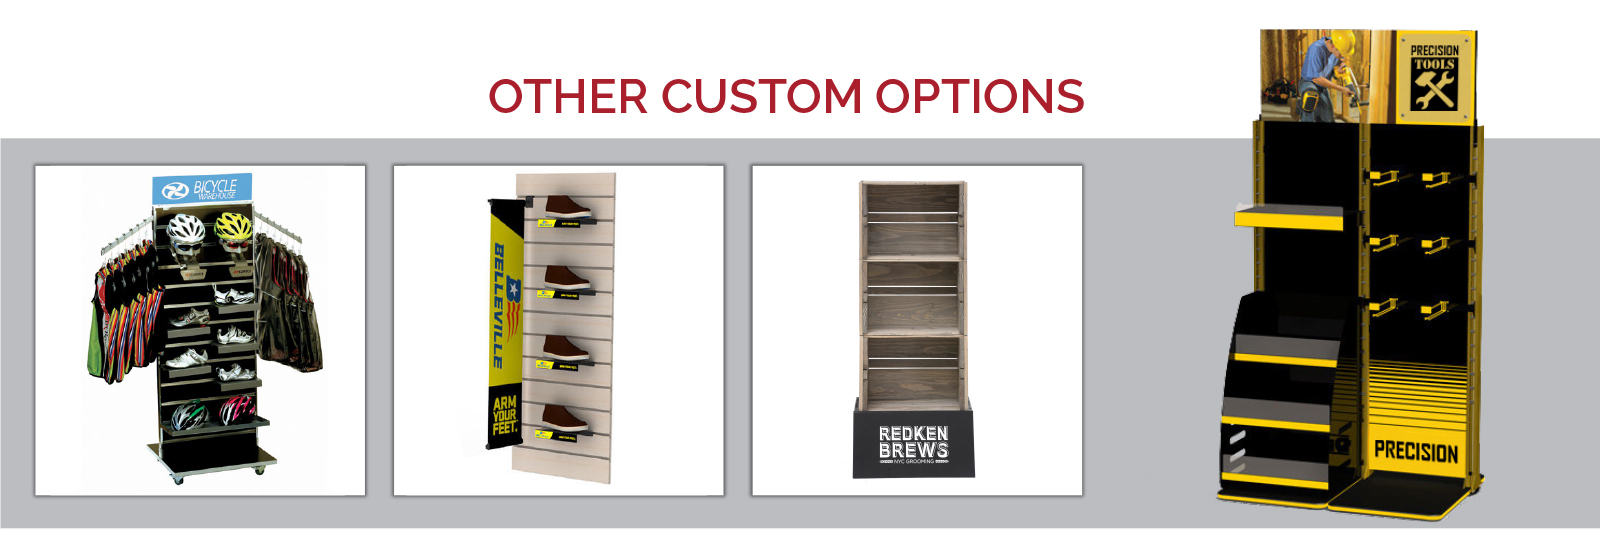 Other Custom Options